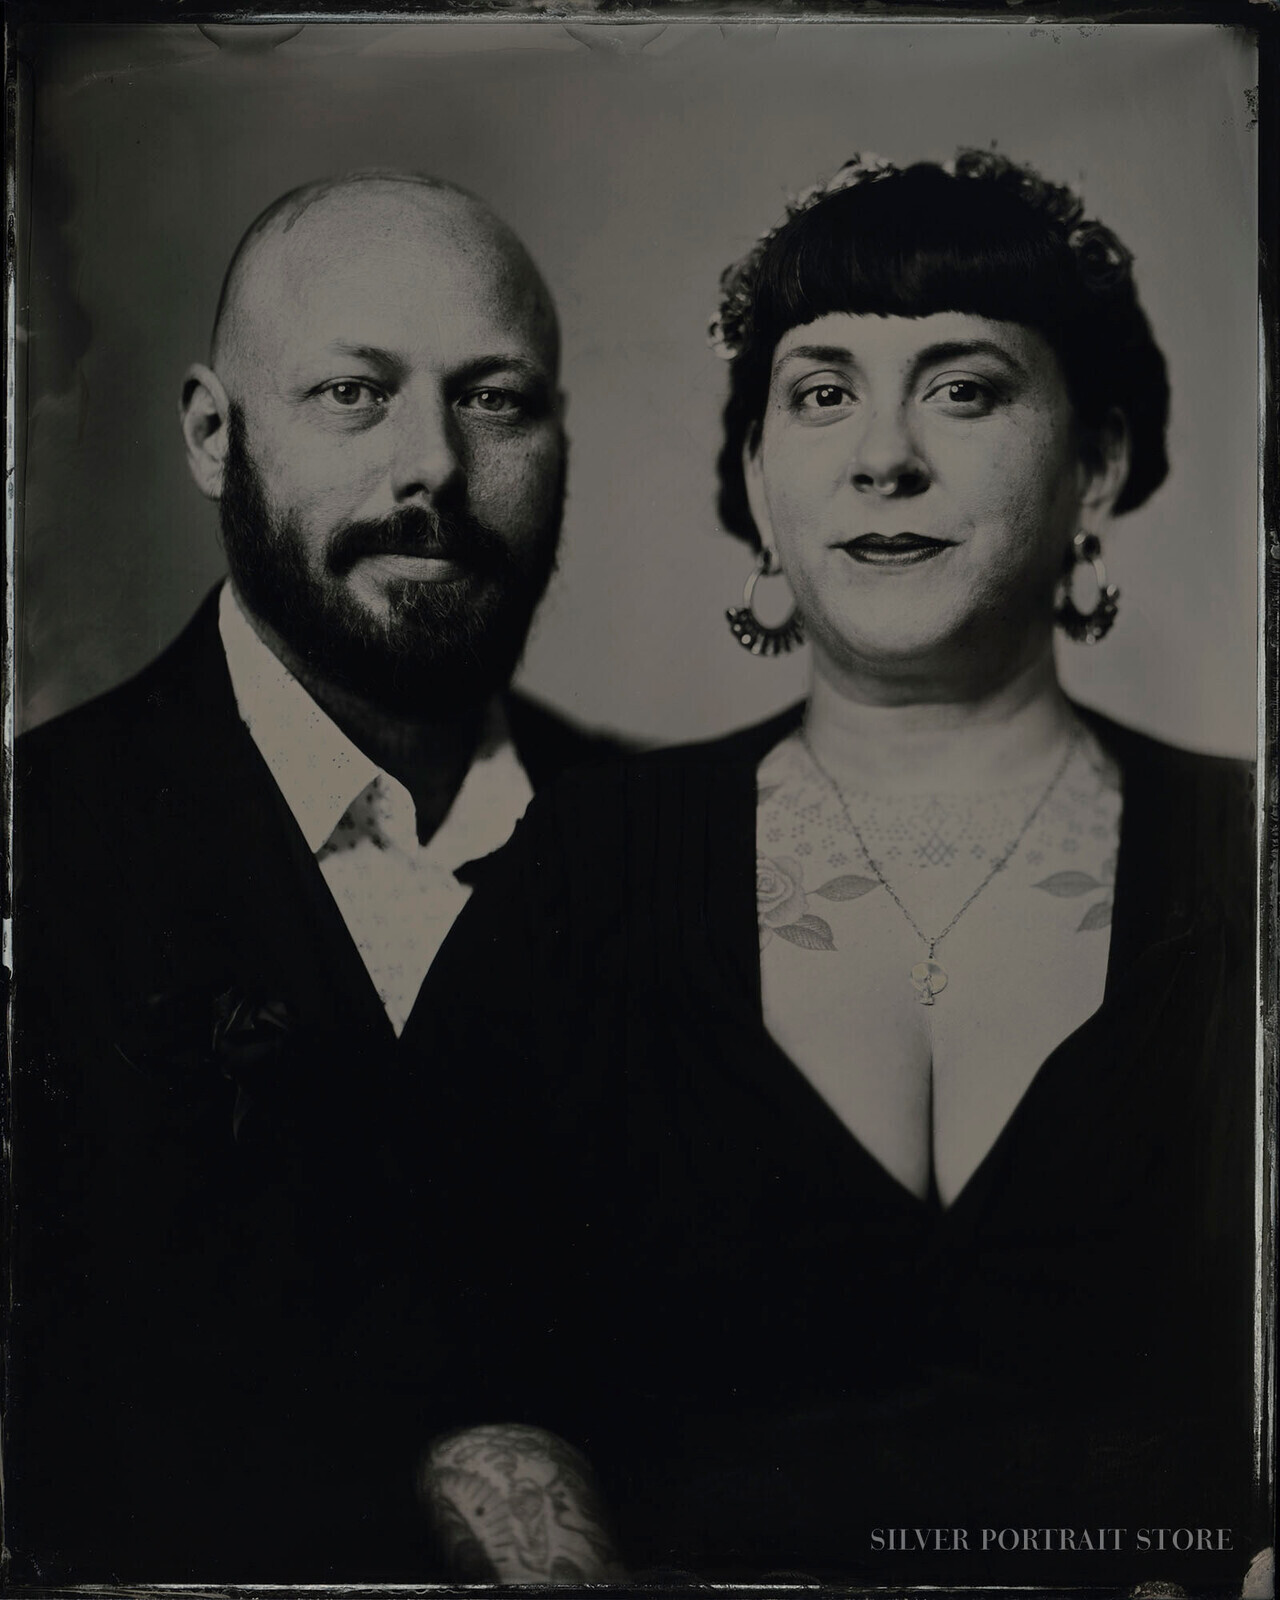 Kim & Katie-Silver Portrait Store-Wet plate collodion-Tintype 20 x 25 cm.